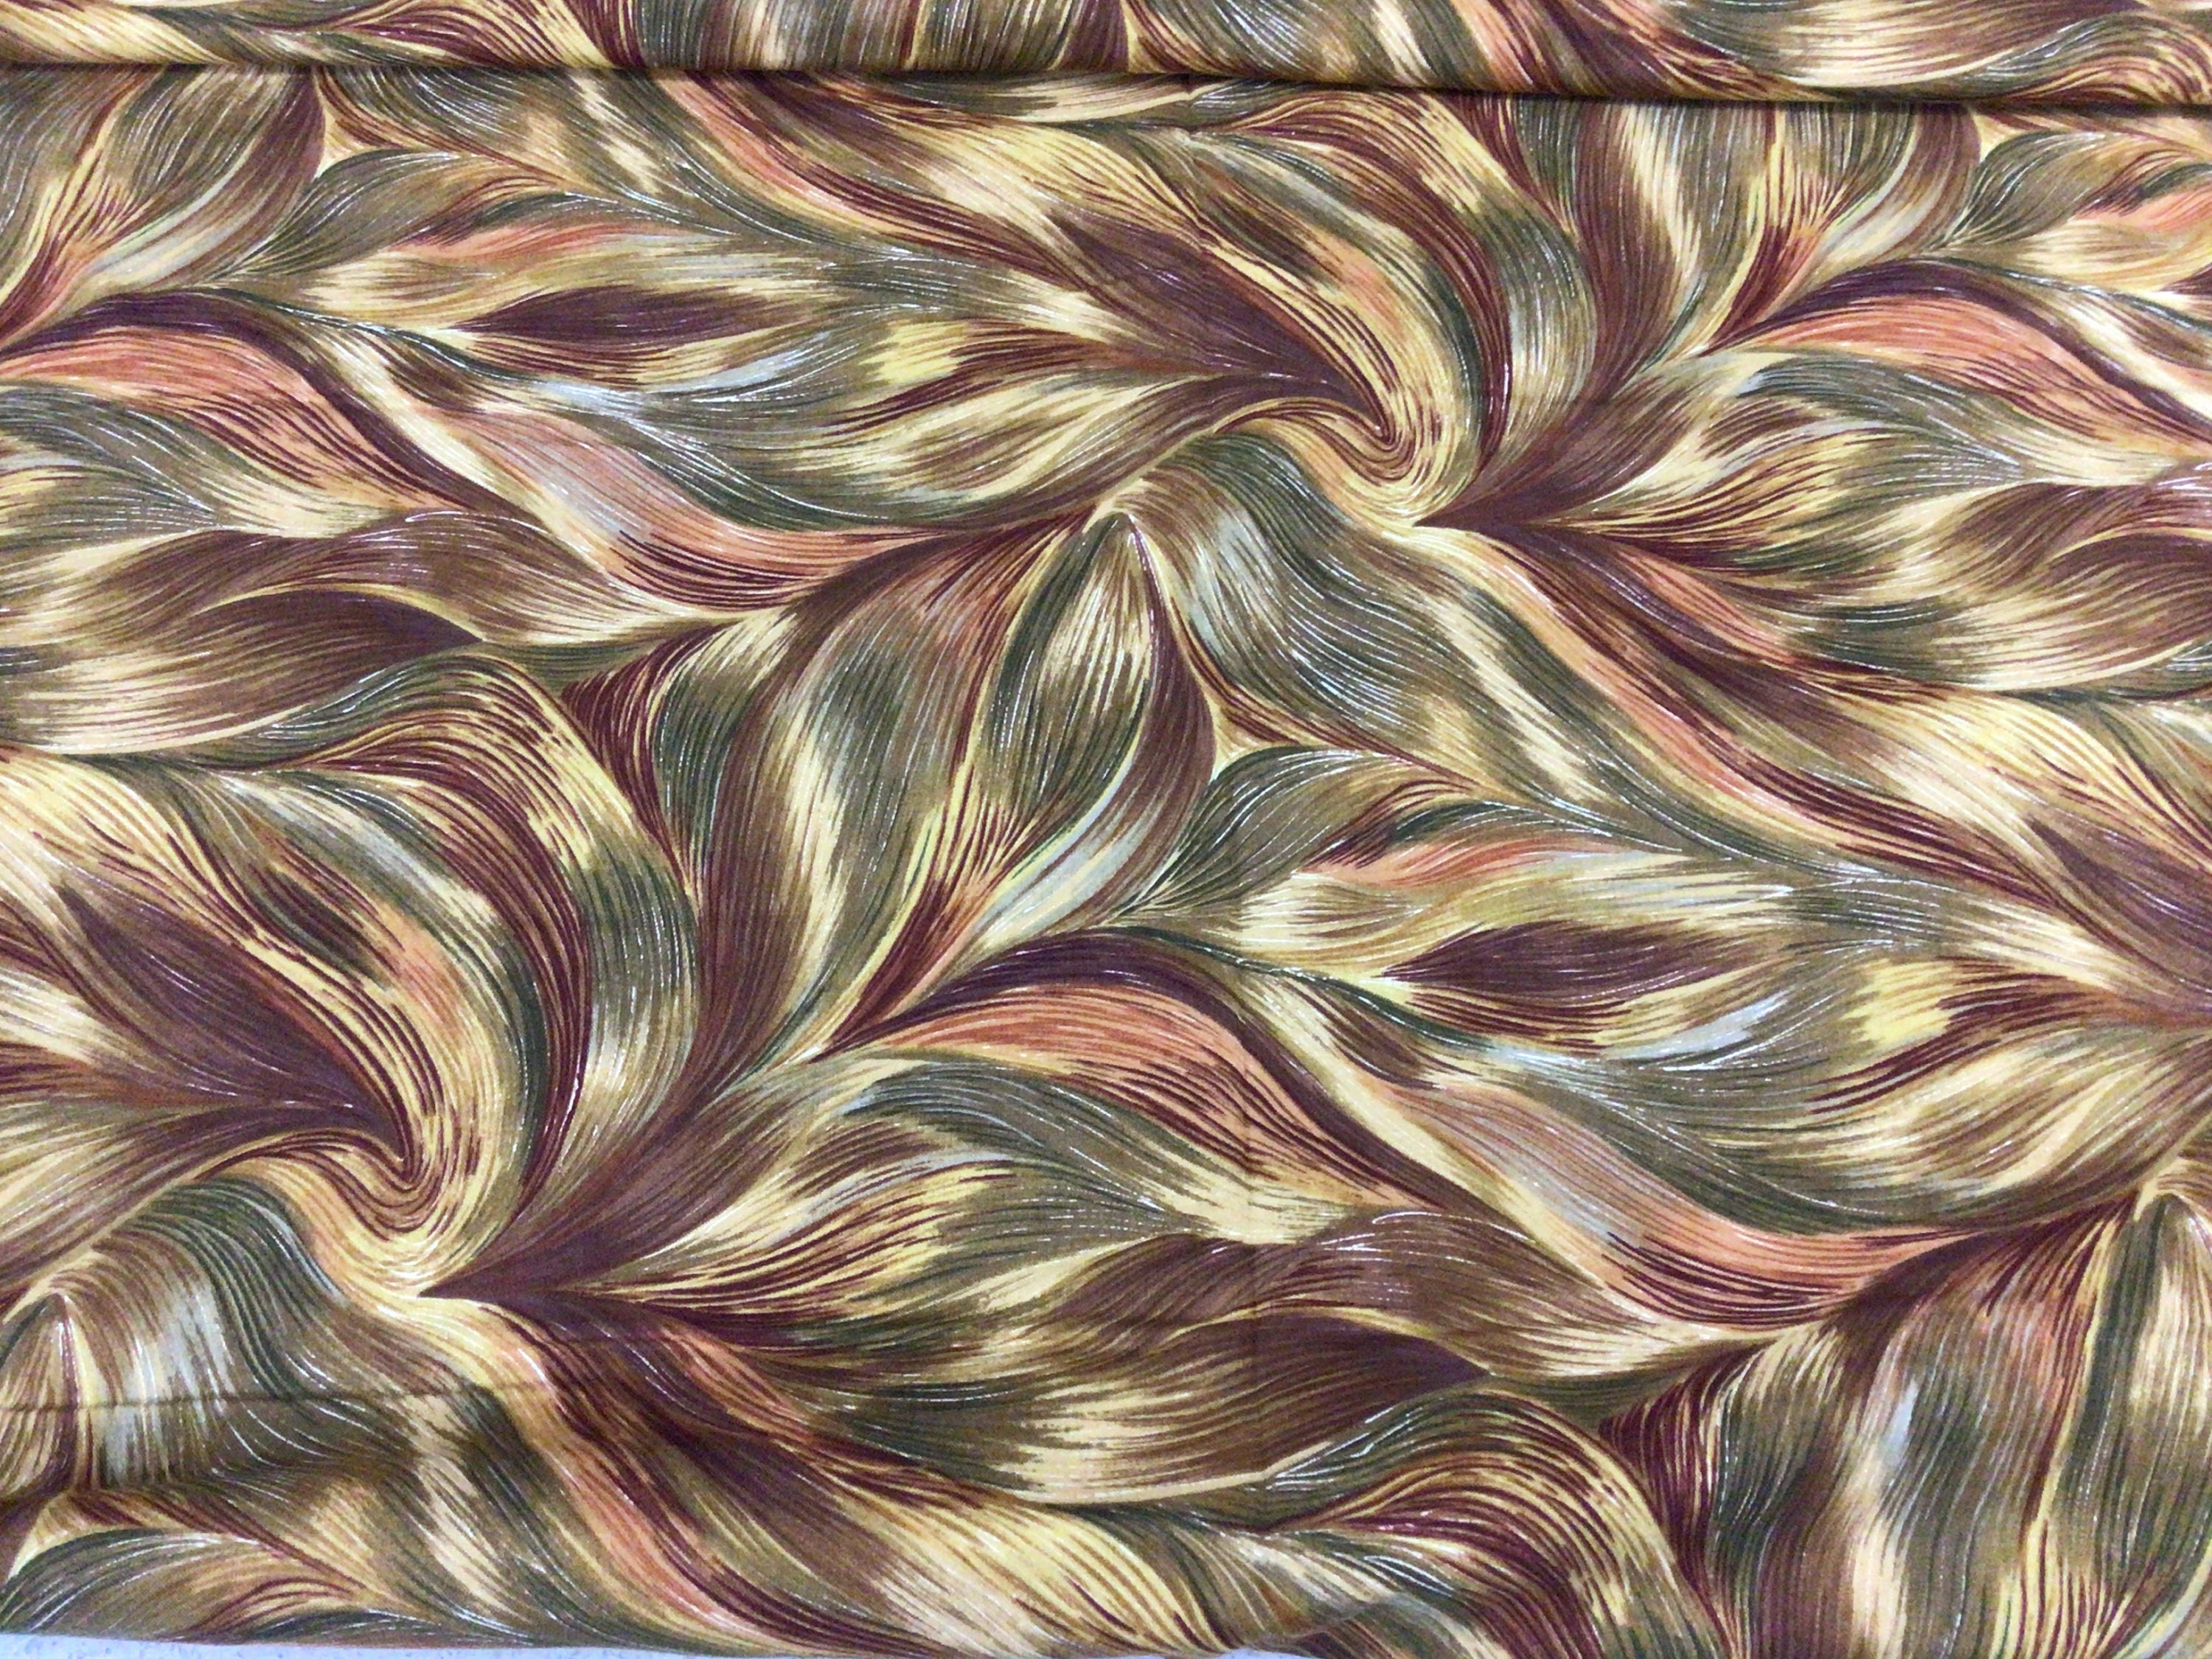 Green Fabric, Solid Cotton Fabric, Grass Green, Linen Texture Fabric,  Screen Print Digital Fabric, by Hoffman California Fabrics, S4705-115 